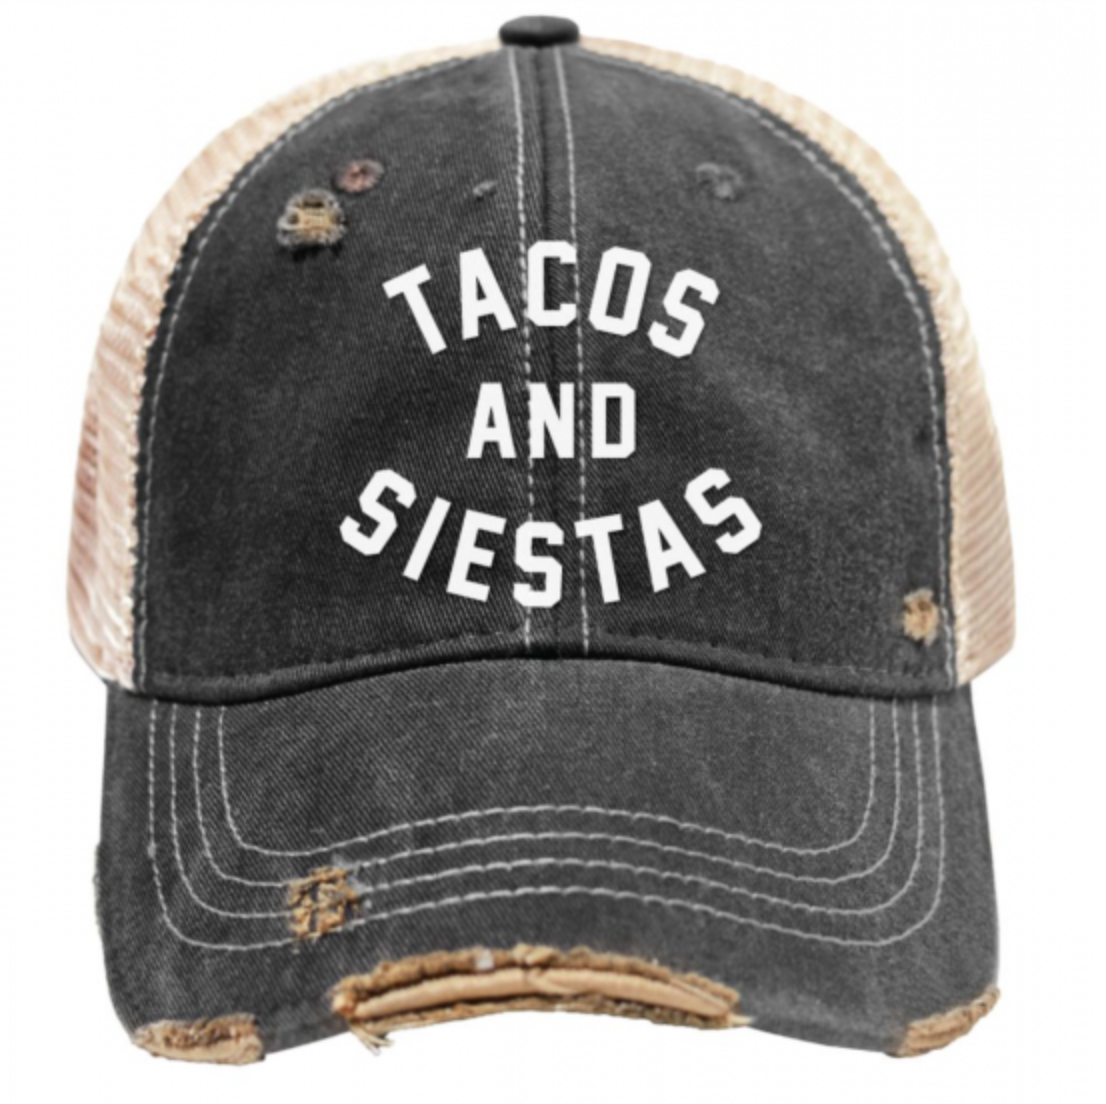 Tacos and Siestas Snap Back Trucker Cap